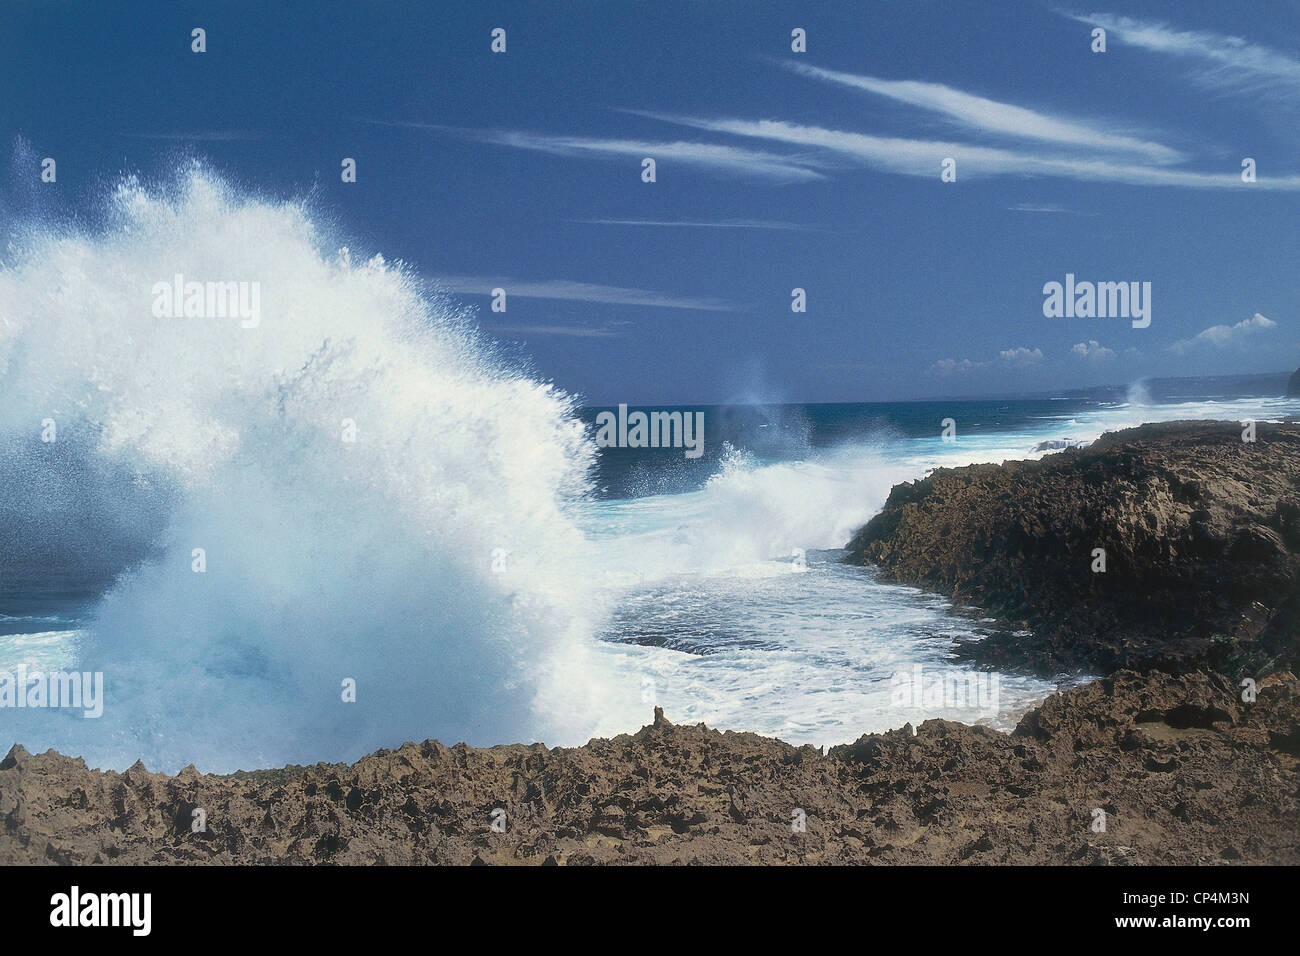 Puerto Rico - Intorno a Isabela. Rottura d'onda sulla riva. Foto Stock